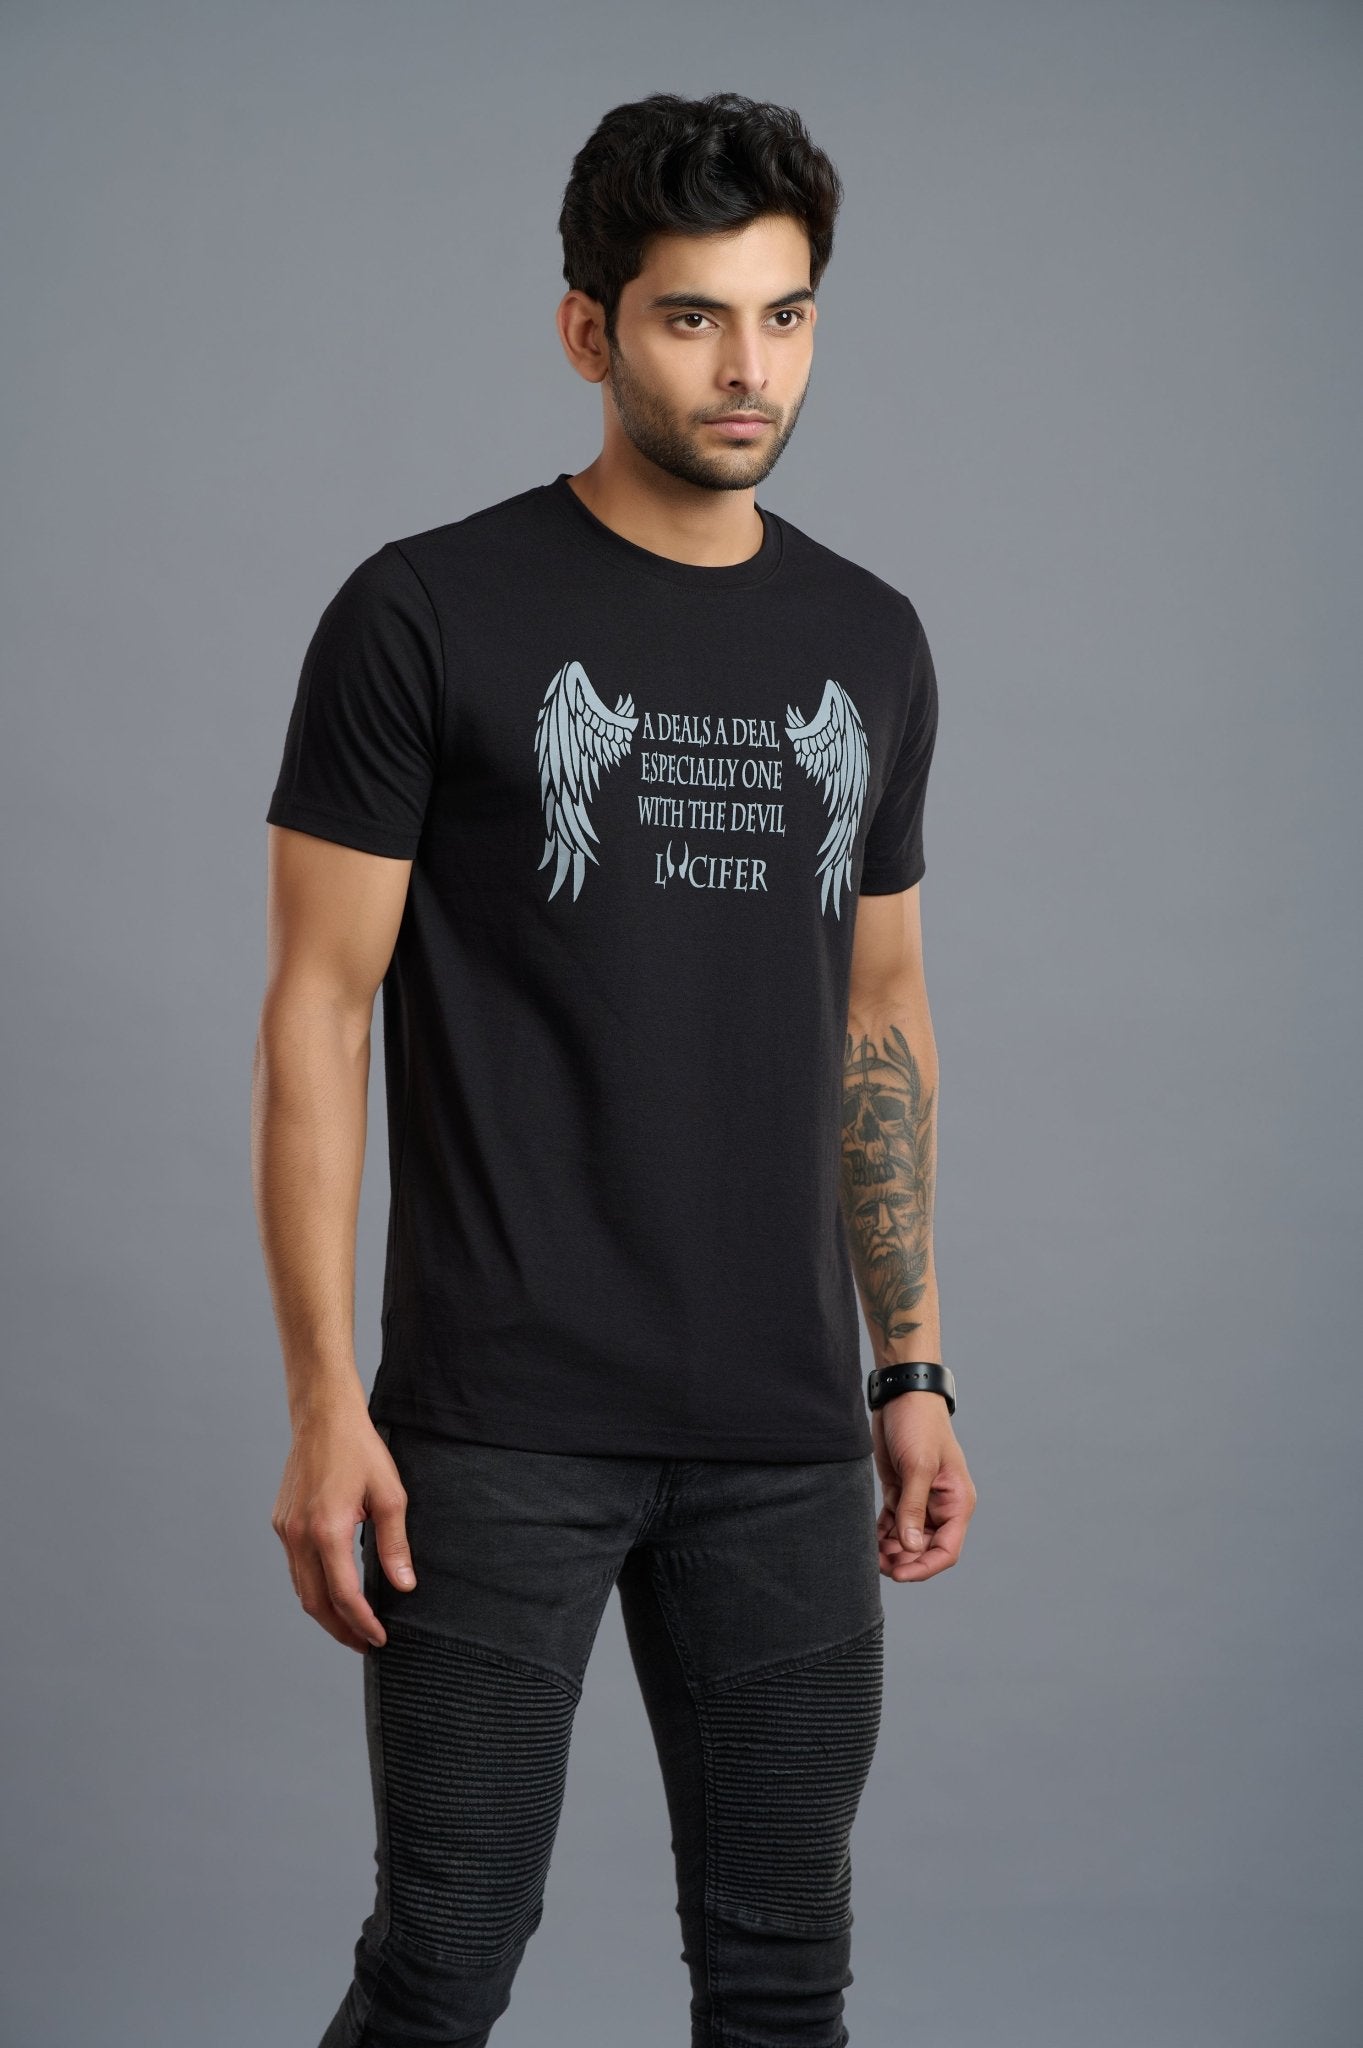 Lucifer the Devil Printed Black T-Shirt for Men - Go Devil